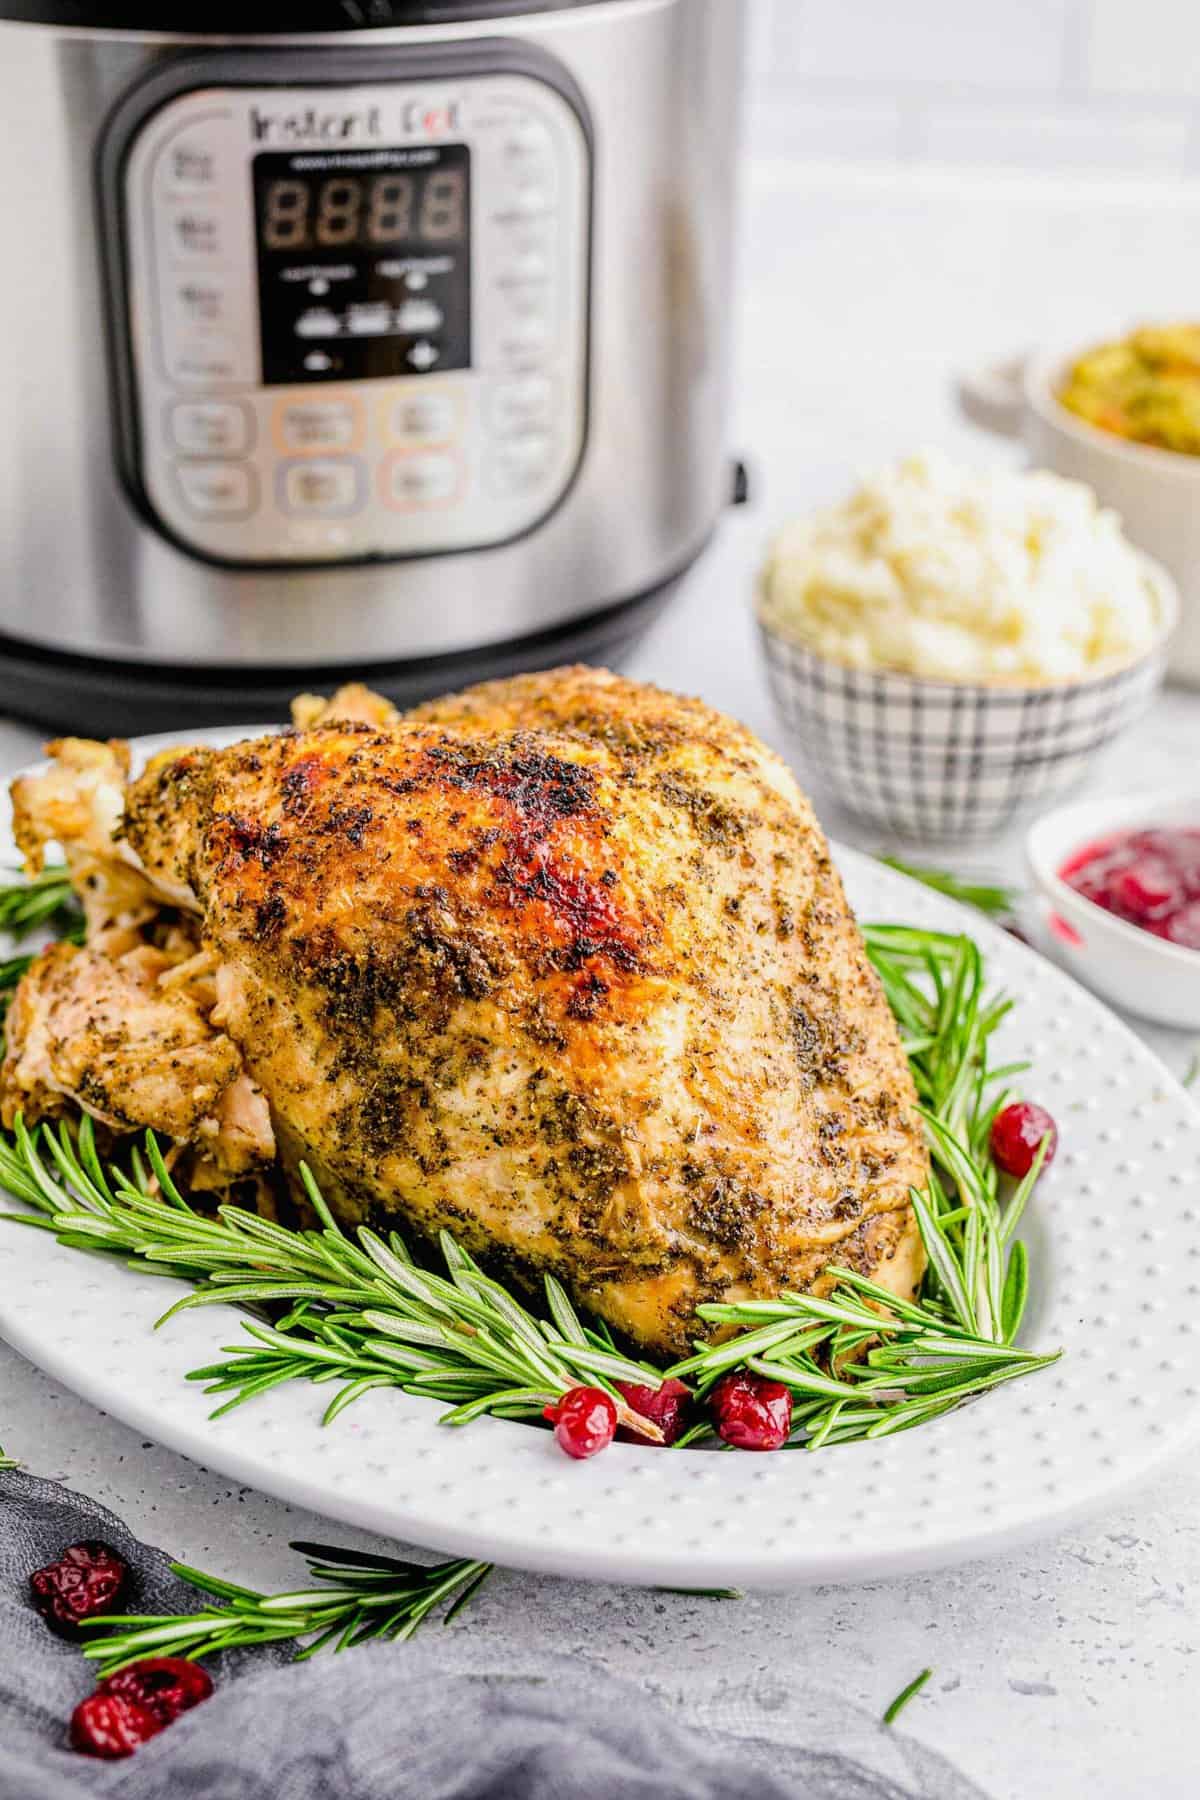 https://www.tablefortwoblog.com/wp-content/uploads/2021/10/instant-pot-turkey-roast-recipe-photo-tablefortwoblog-1-scaled.jpg